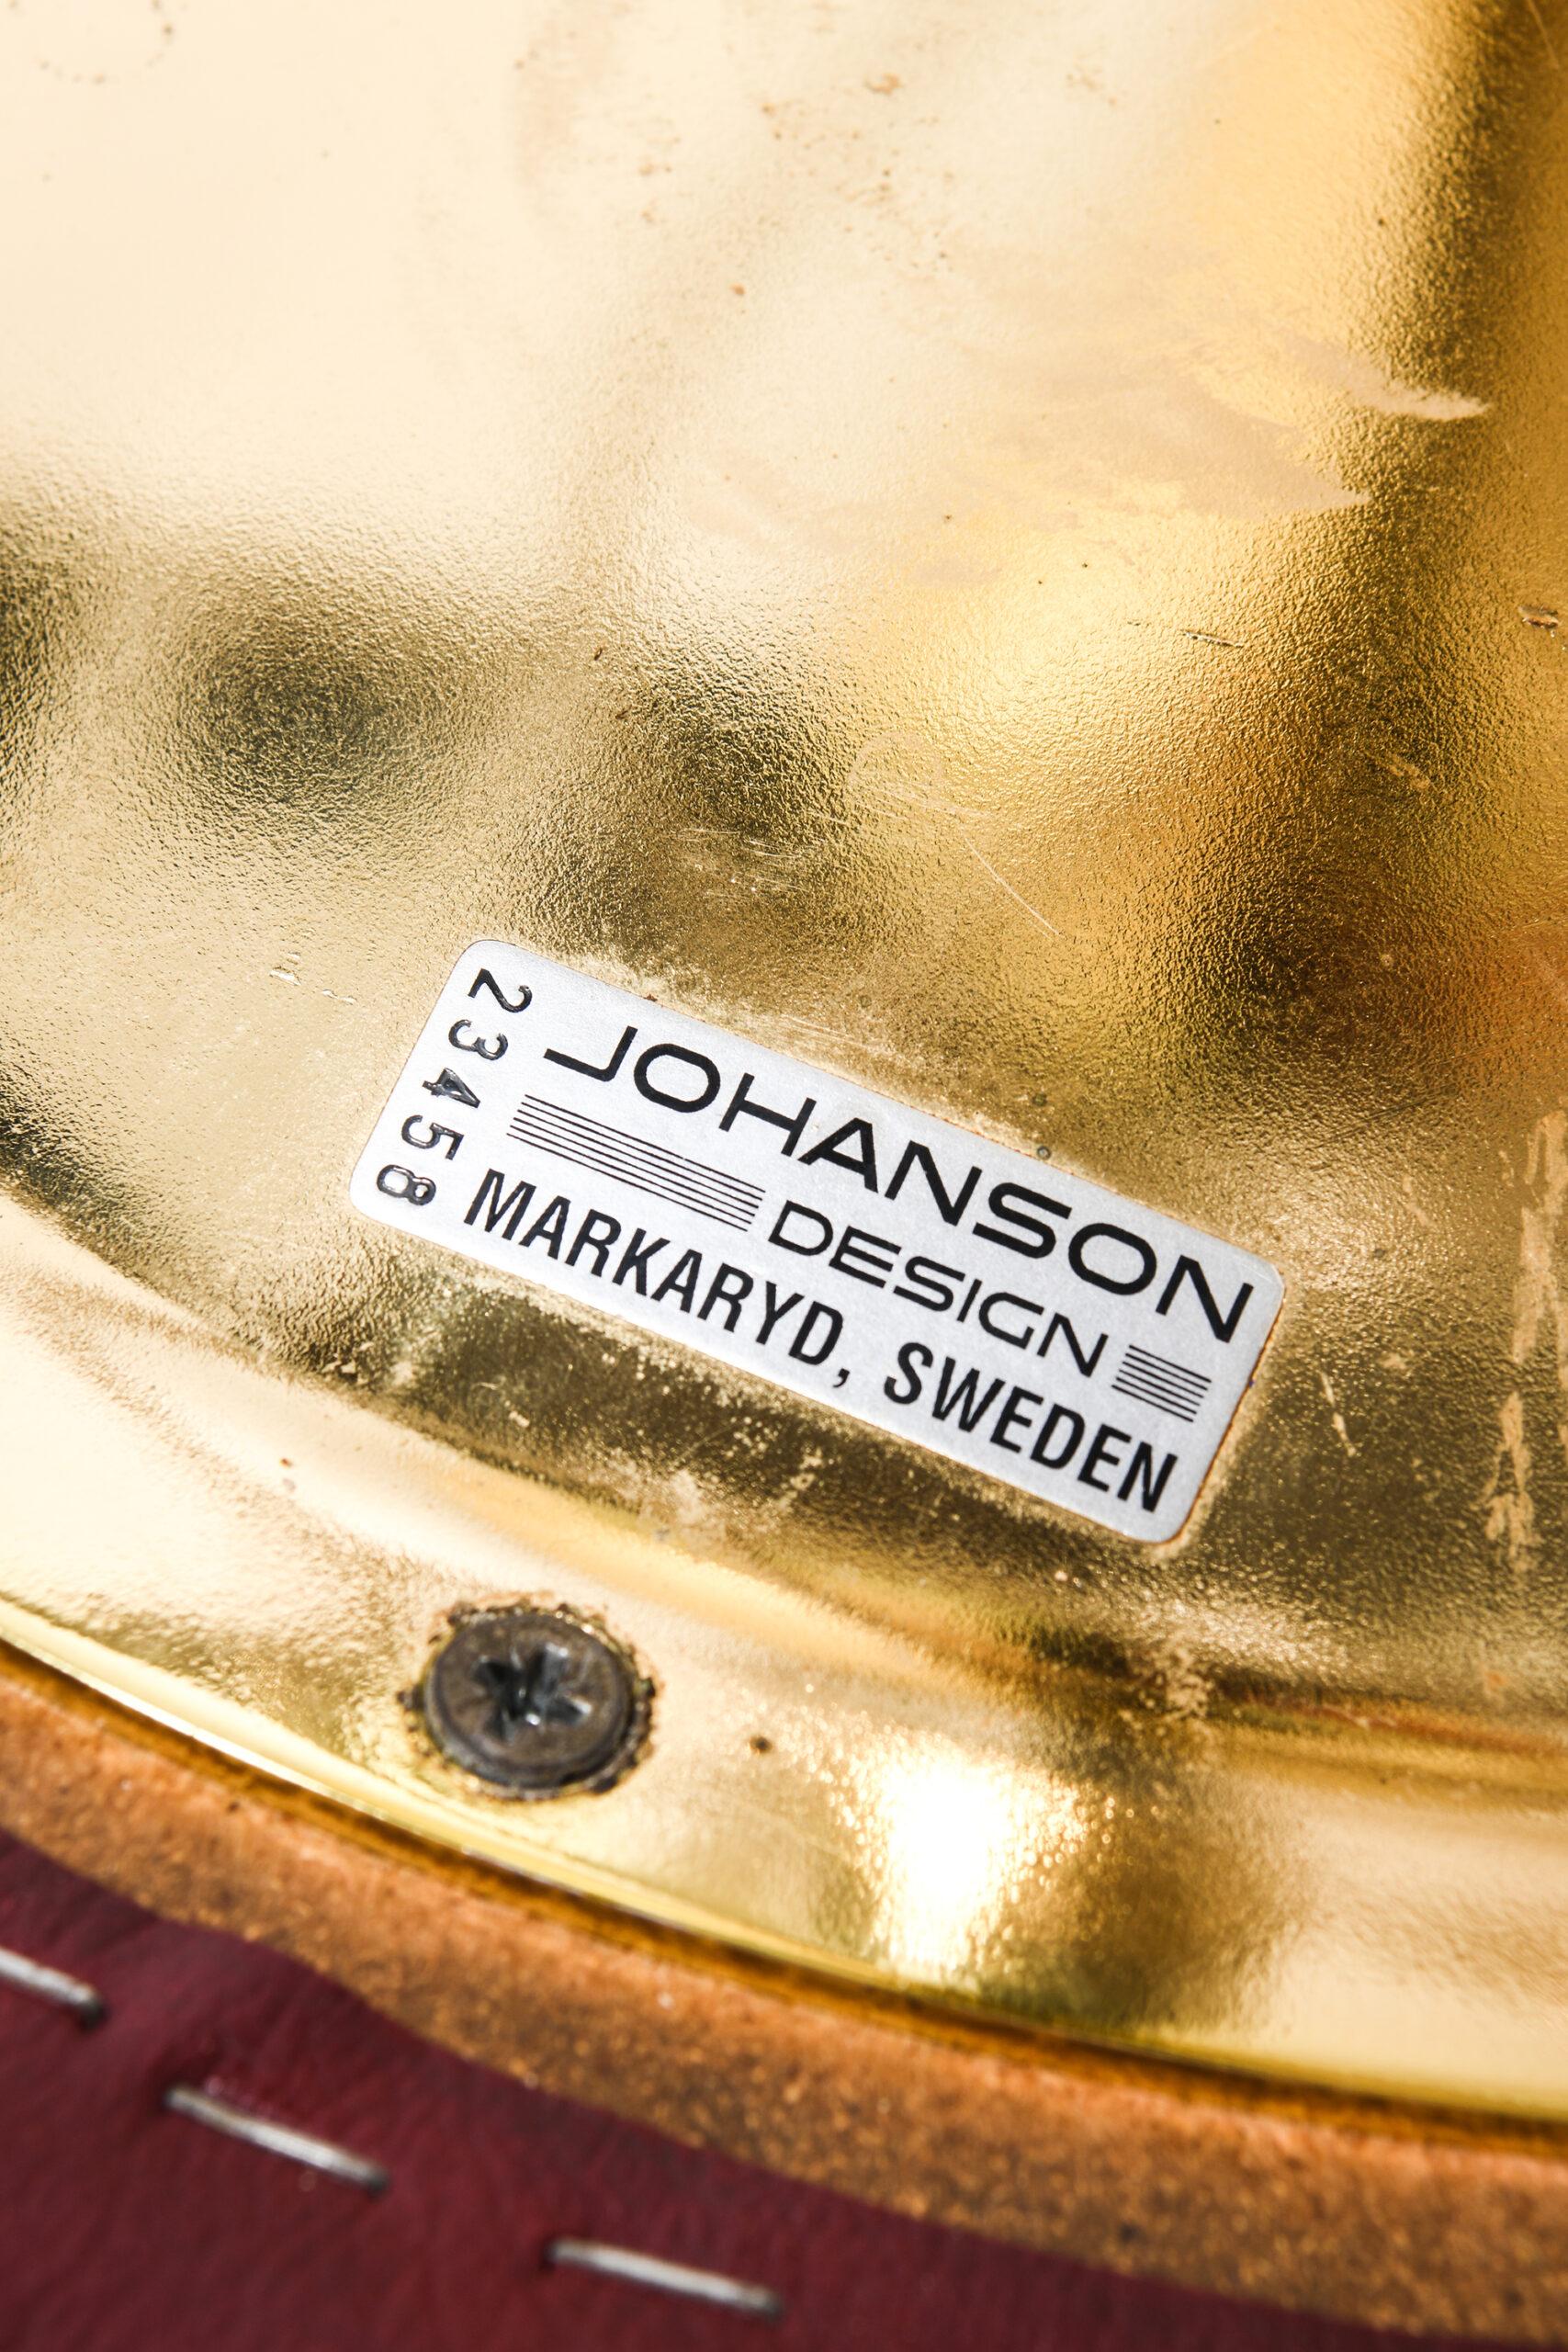 Swedish Börje Johanson Bar Stools Produced by Johanson Design in Markaryd, Sweden